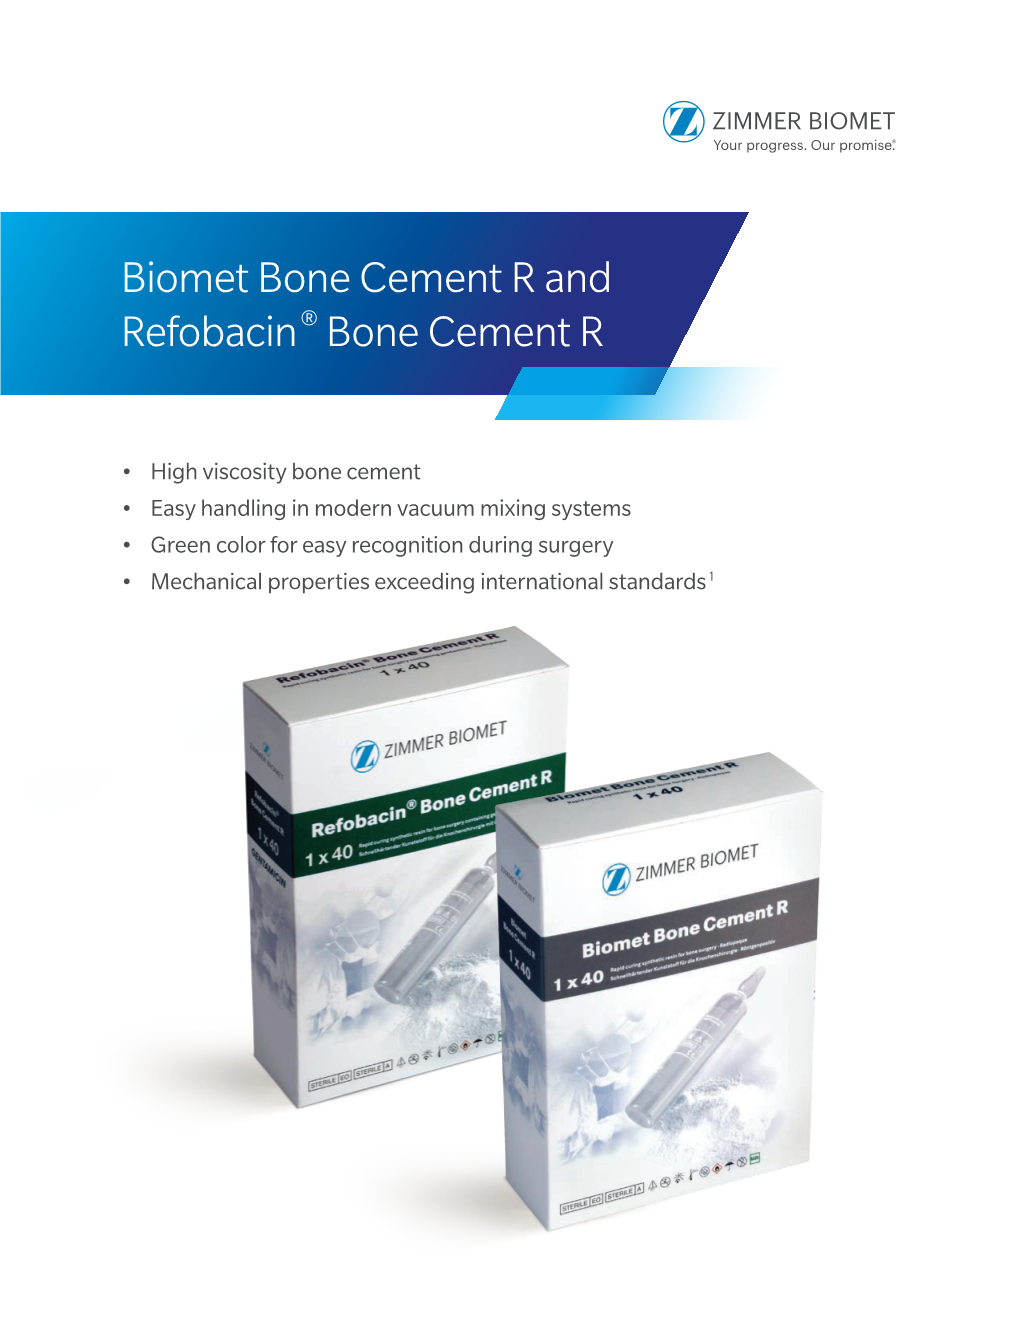 Biomet Bone Cement R and Refobacin® Bone Cement R